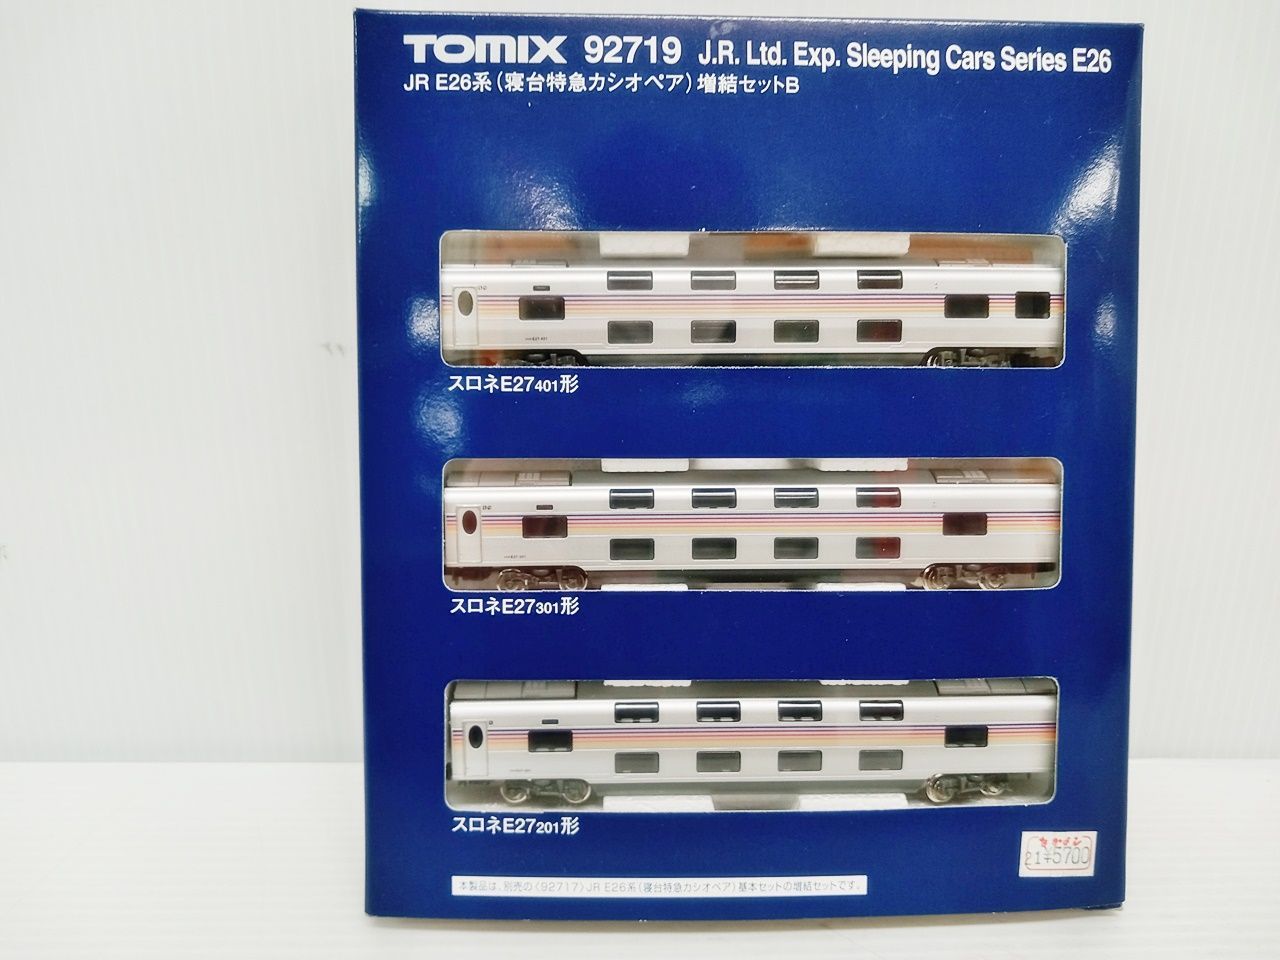 TOMIX 92717 R E26 発売記念 初回パッケージ SERIES寝台特急 